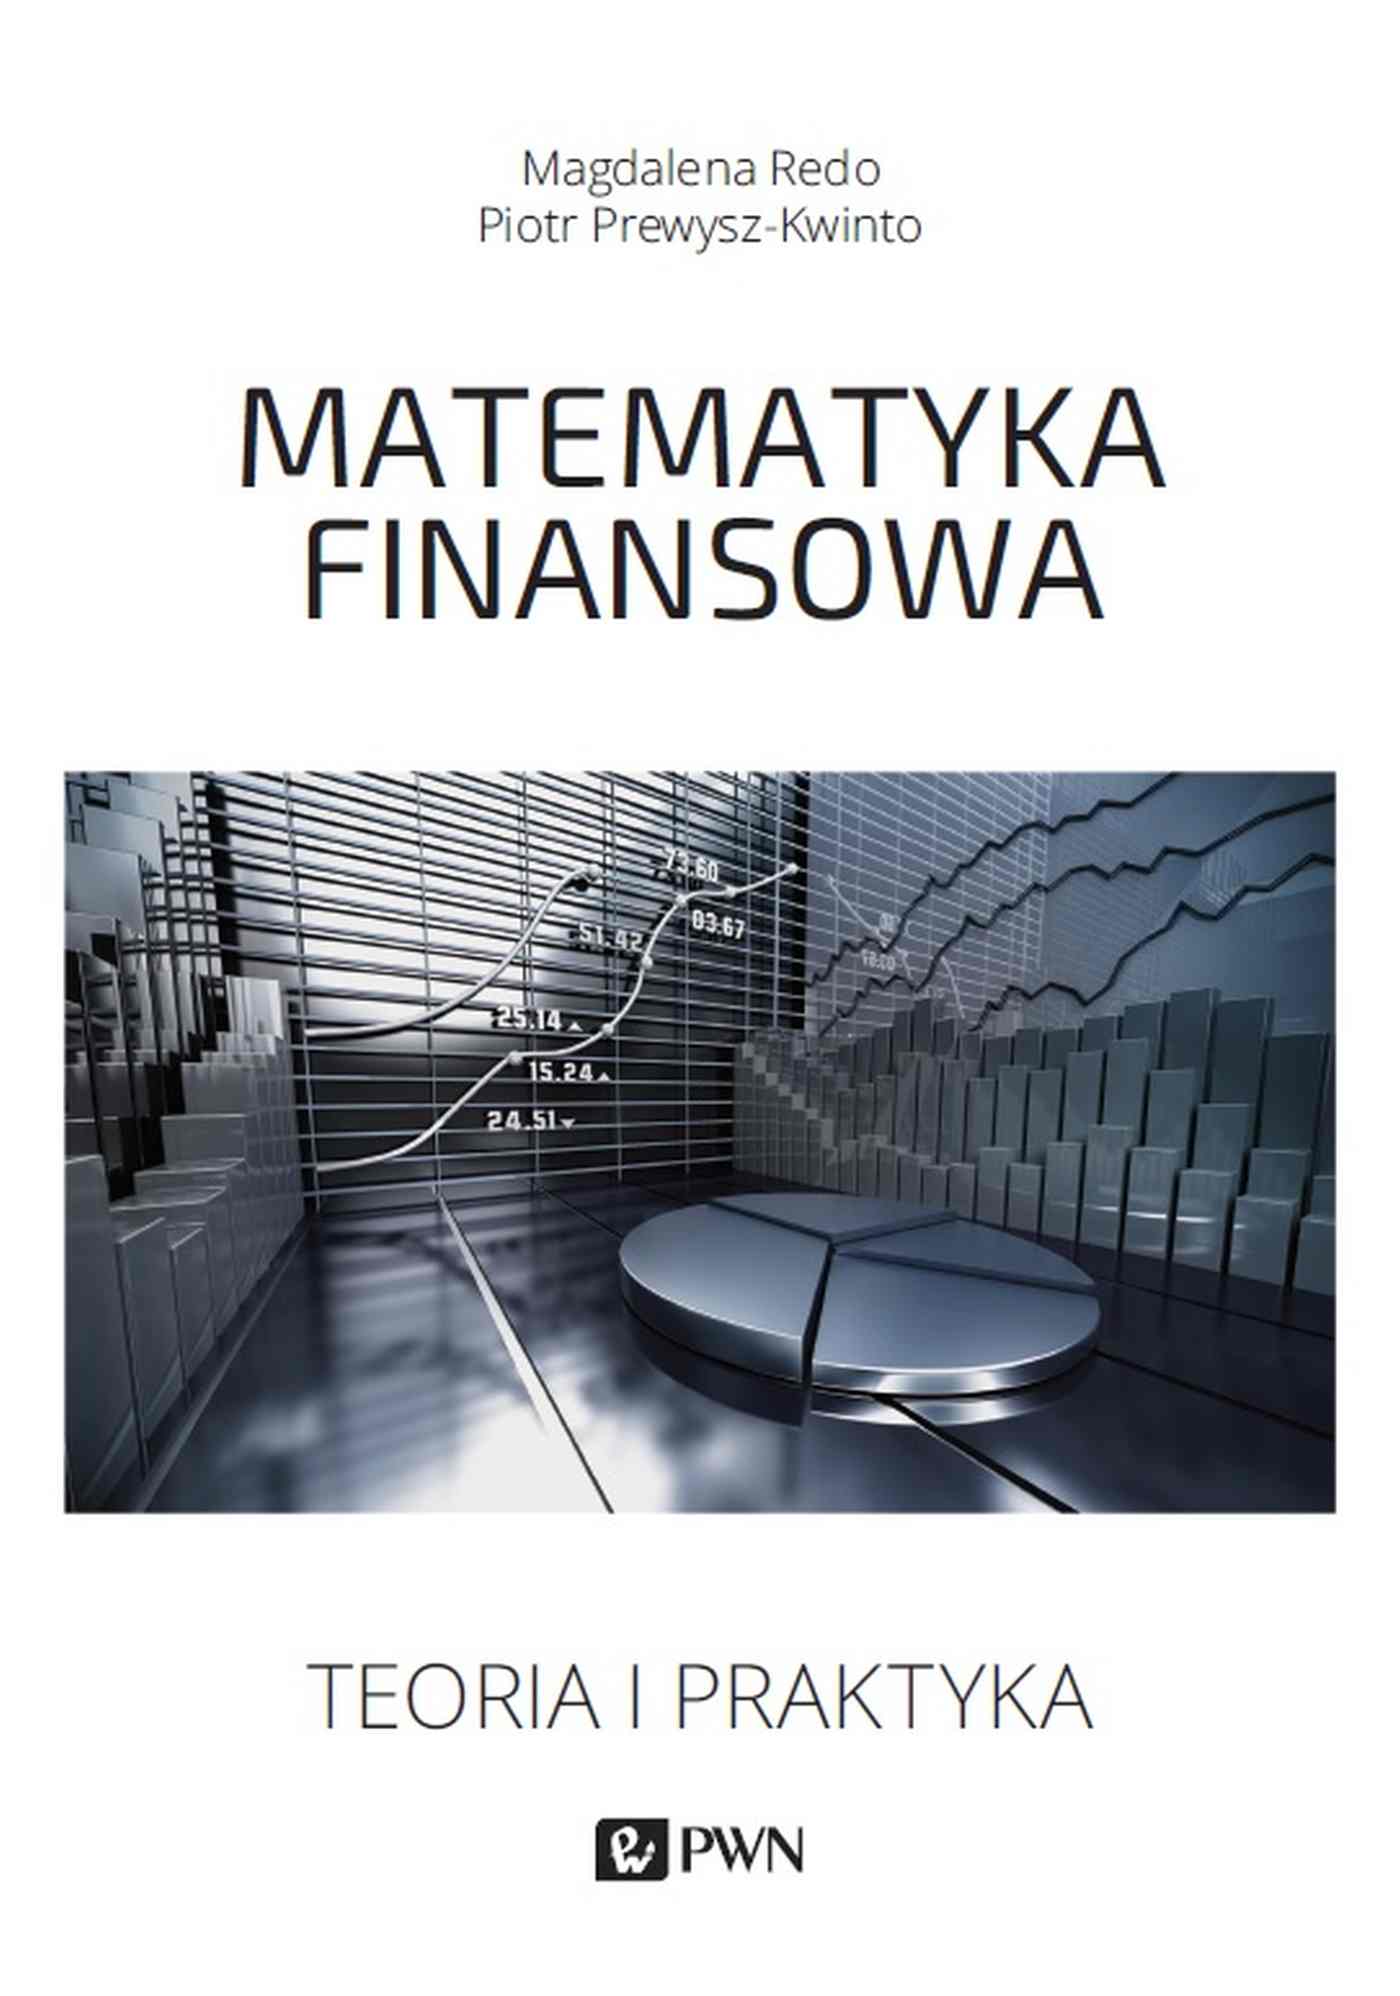 Kniha Matematyka finansowa. Teoria i praktyka Magdalena Redo